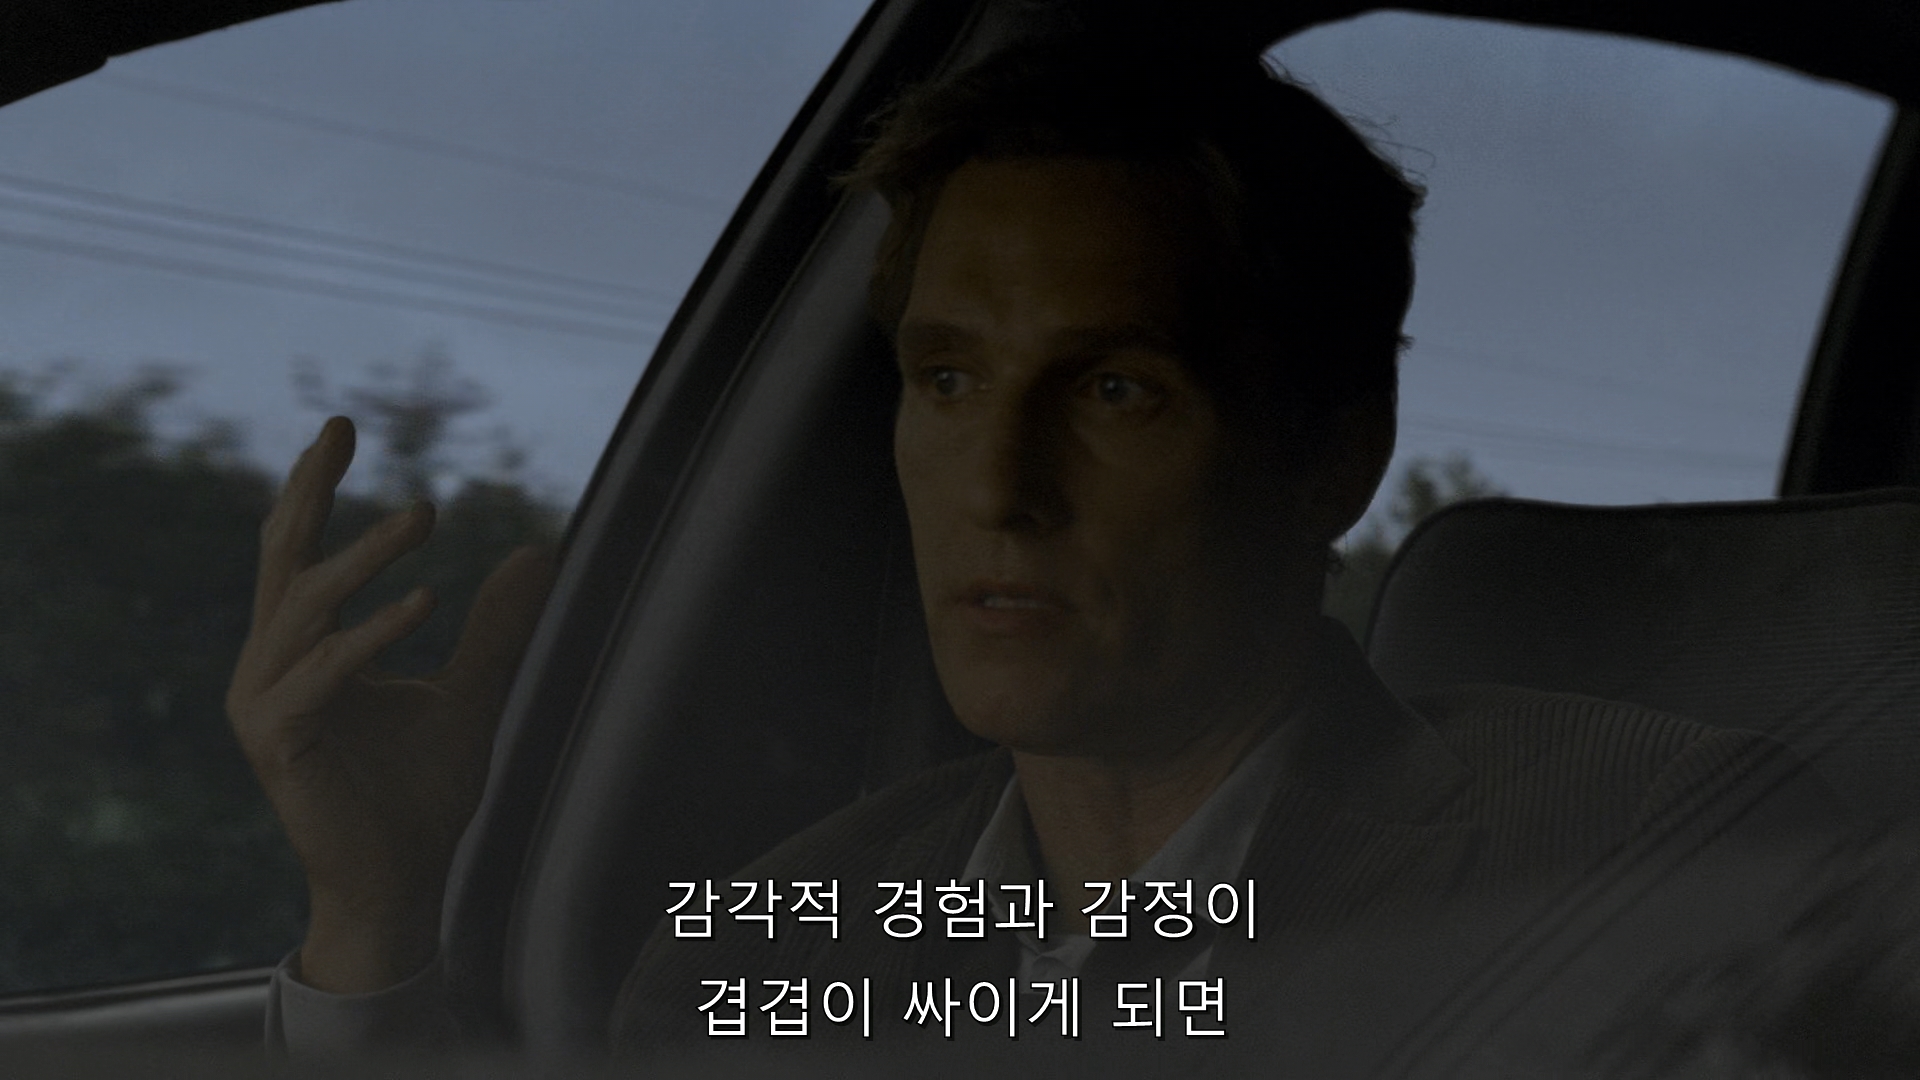 True Detective (2014) - S01E01 - The Long Bright Dark (1080p BluRay x265 afm72).mkv_000994806.jpg